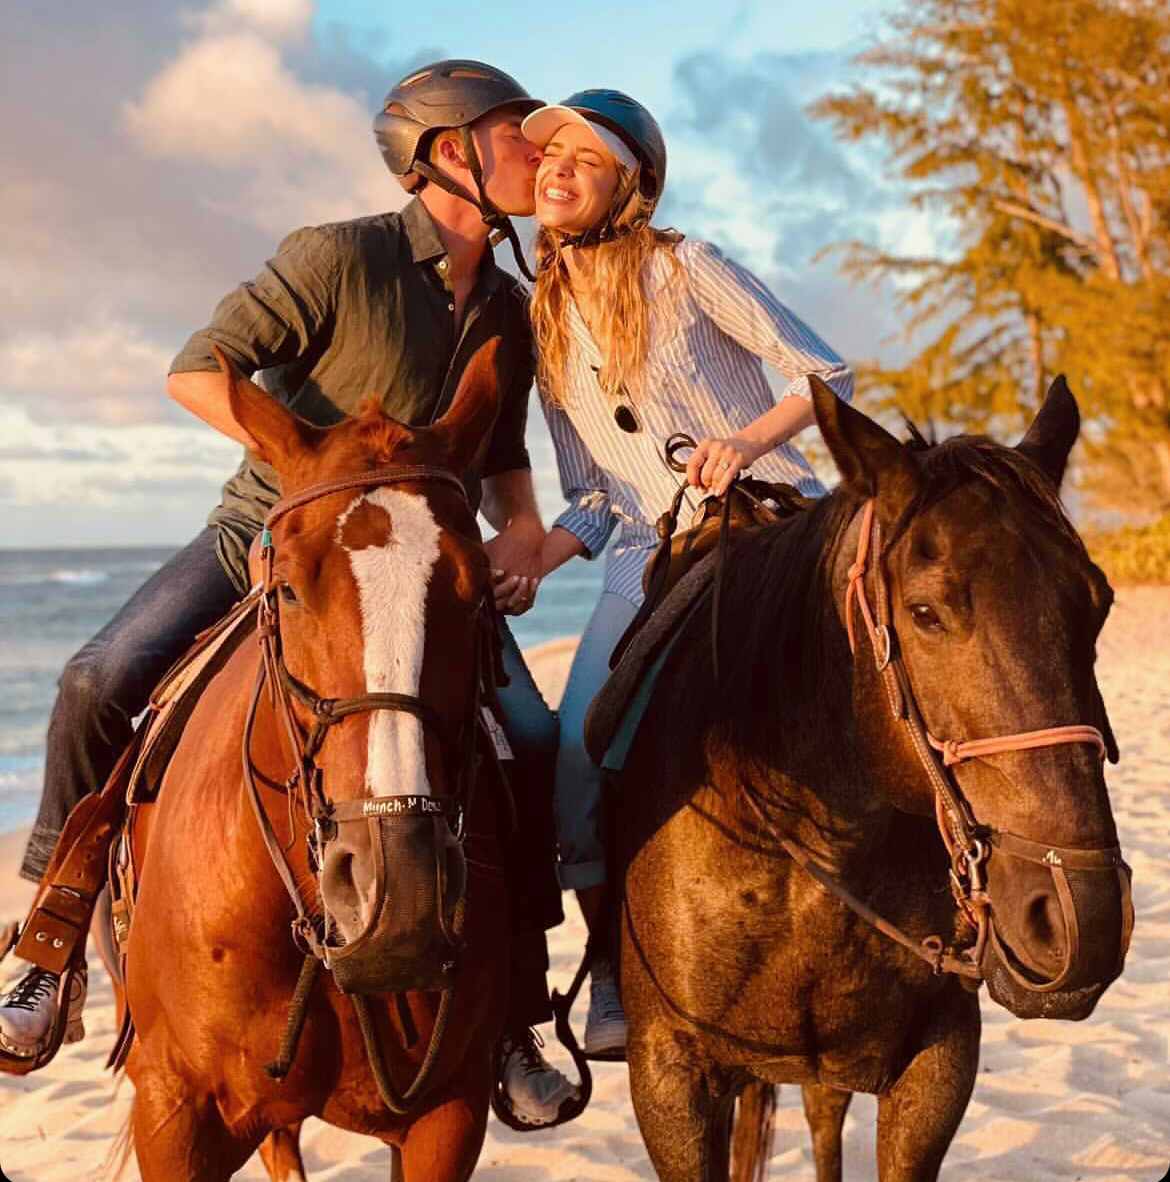 oahu horseback rides private ride couple